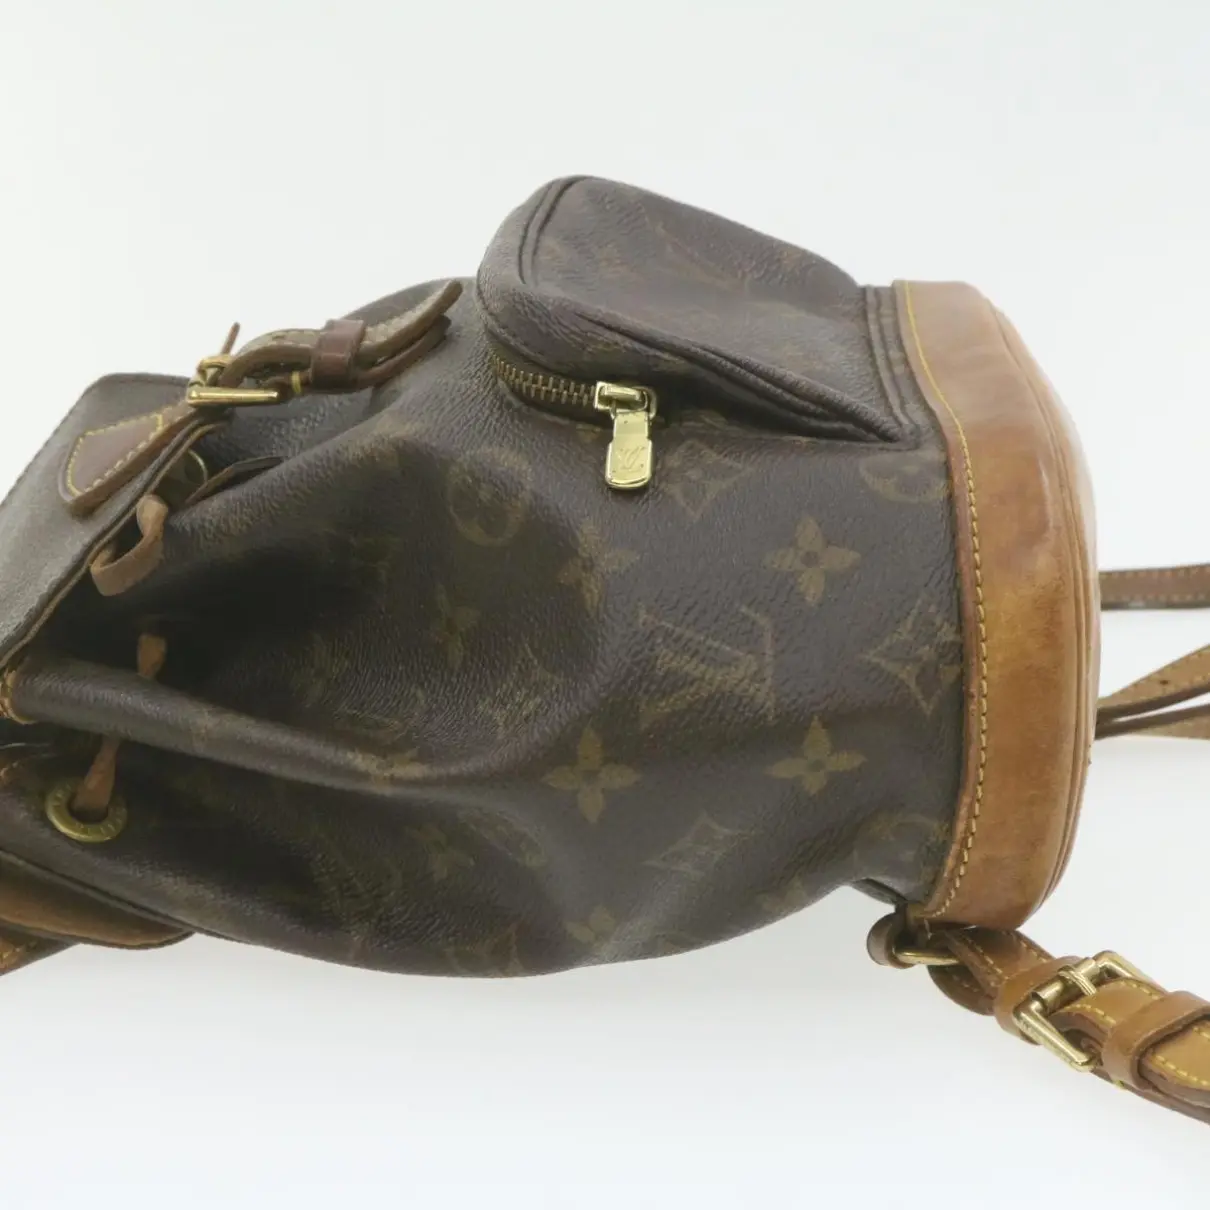 Cloth backpack Louis Vuitton